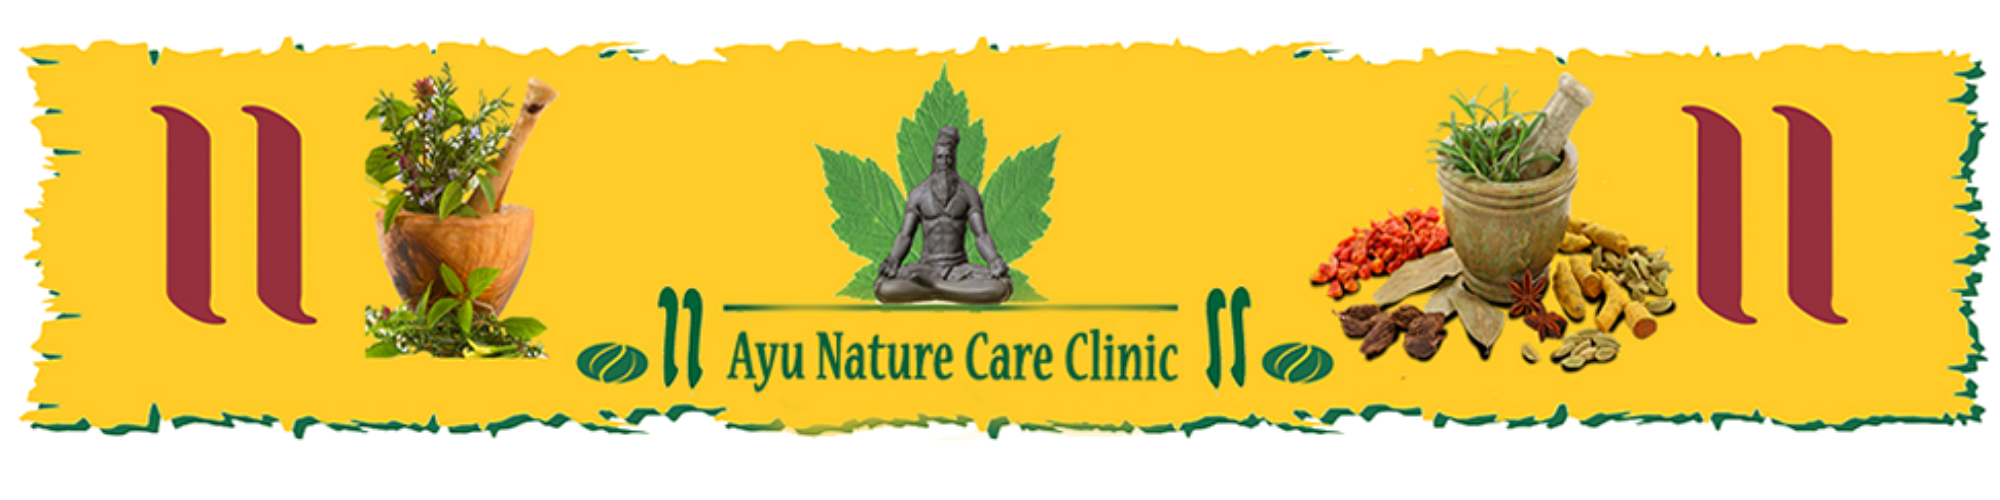 Ayunature Care Clinic cover